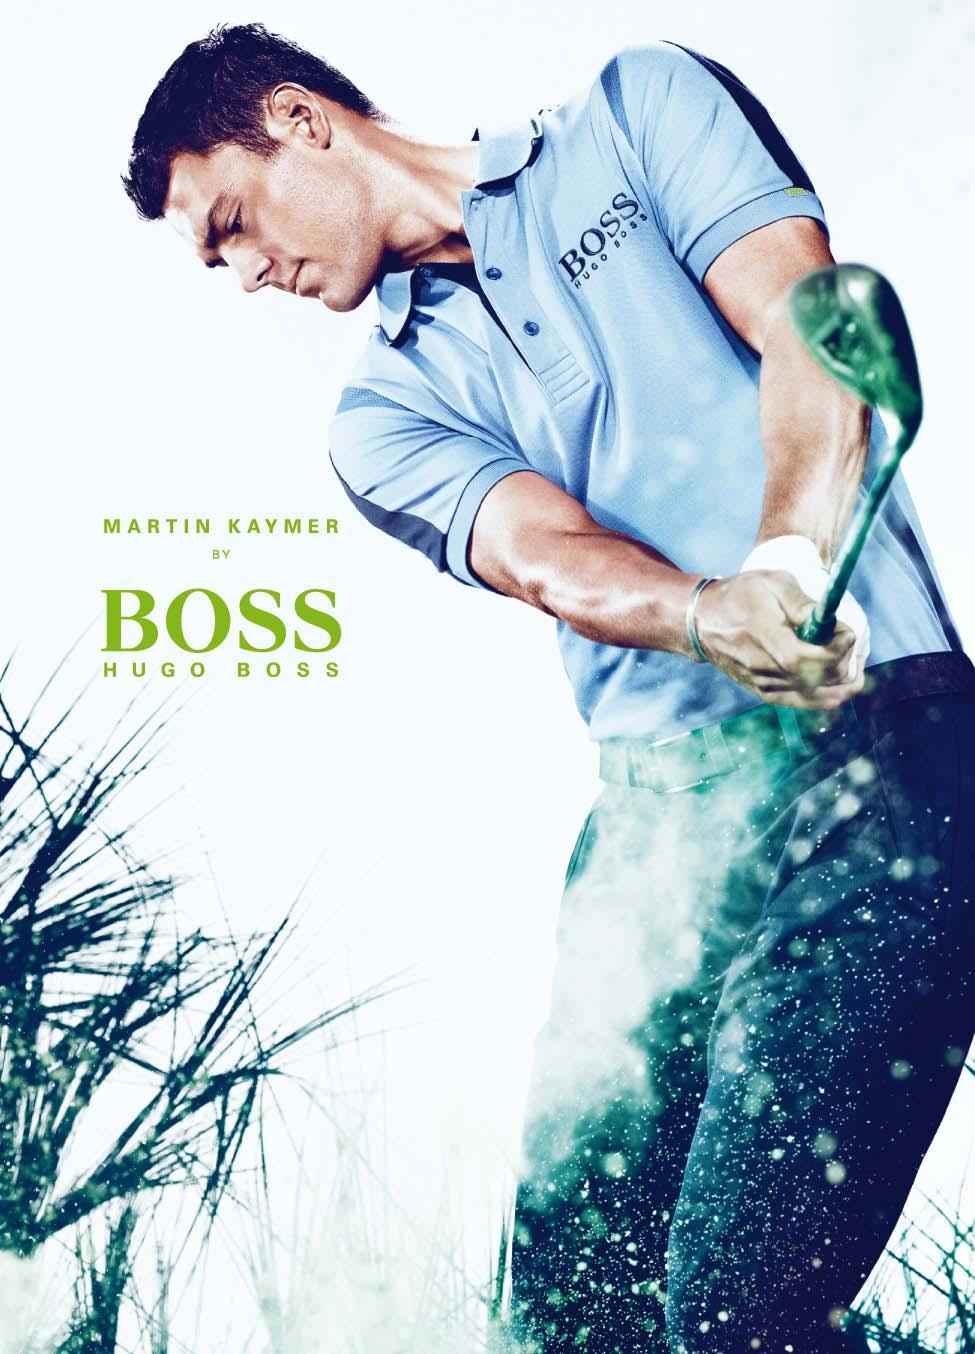 BOSS Green Blurring the boundaries between leisure and golf